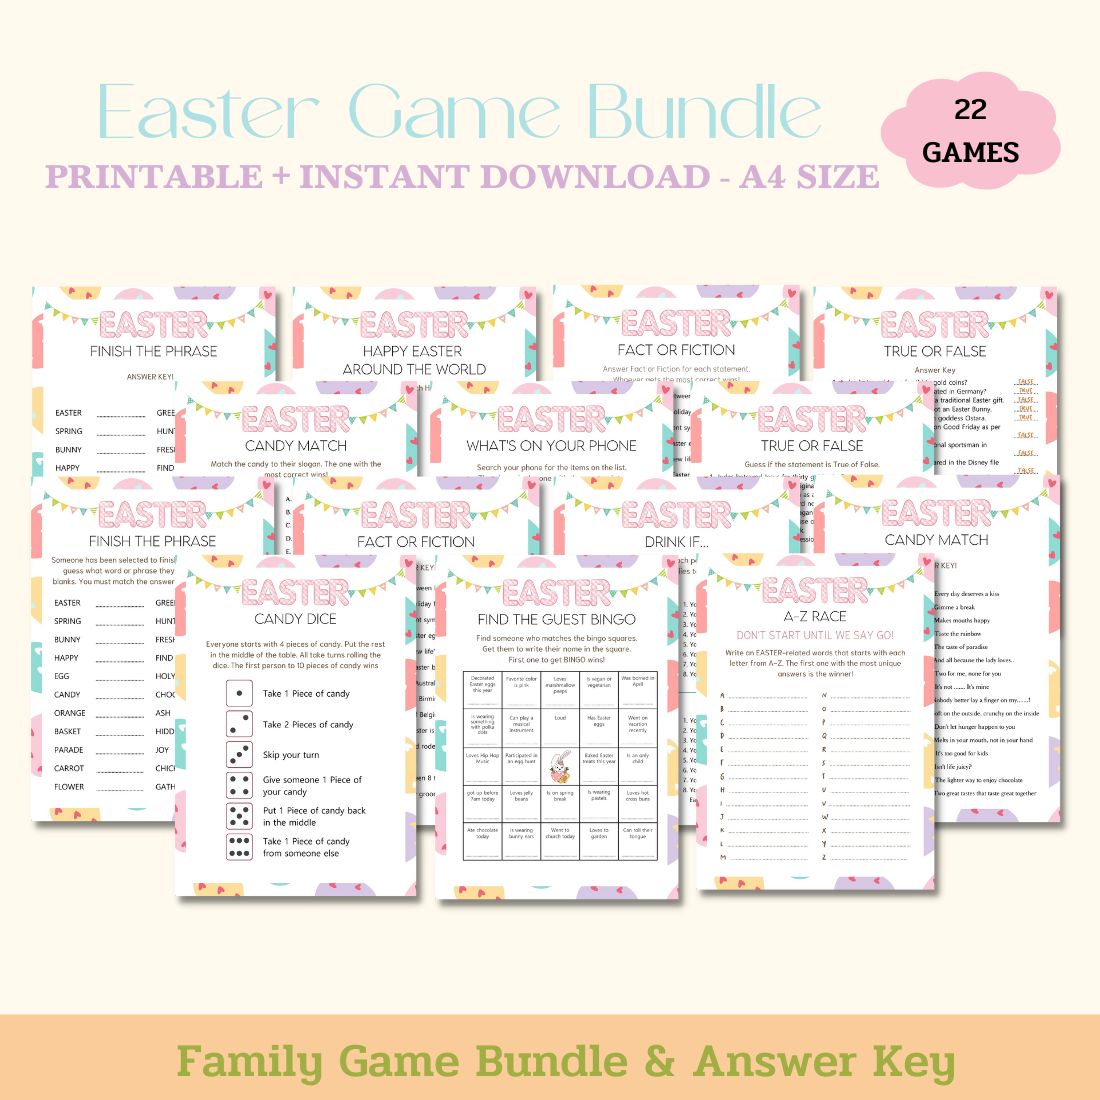 Easter Game Bundle - 22 Games Printable preview image.